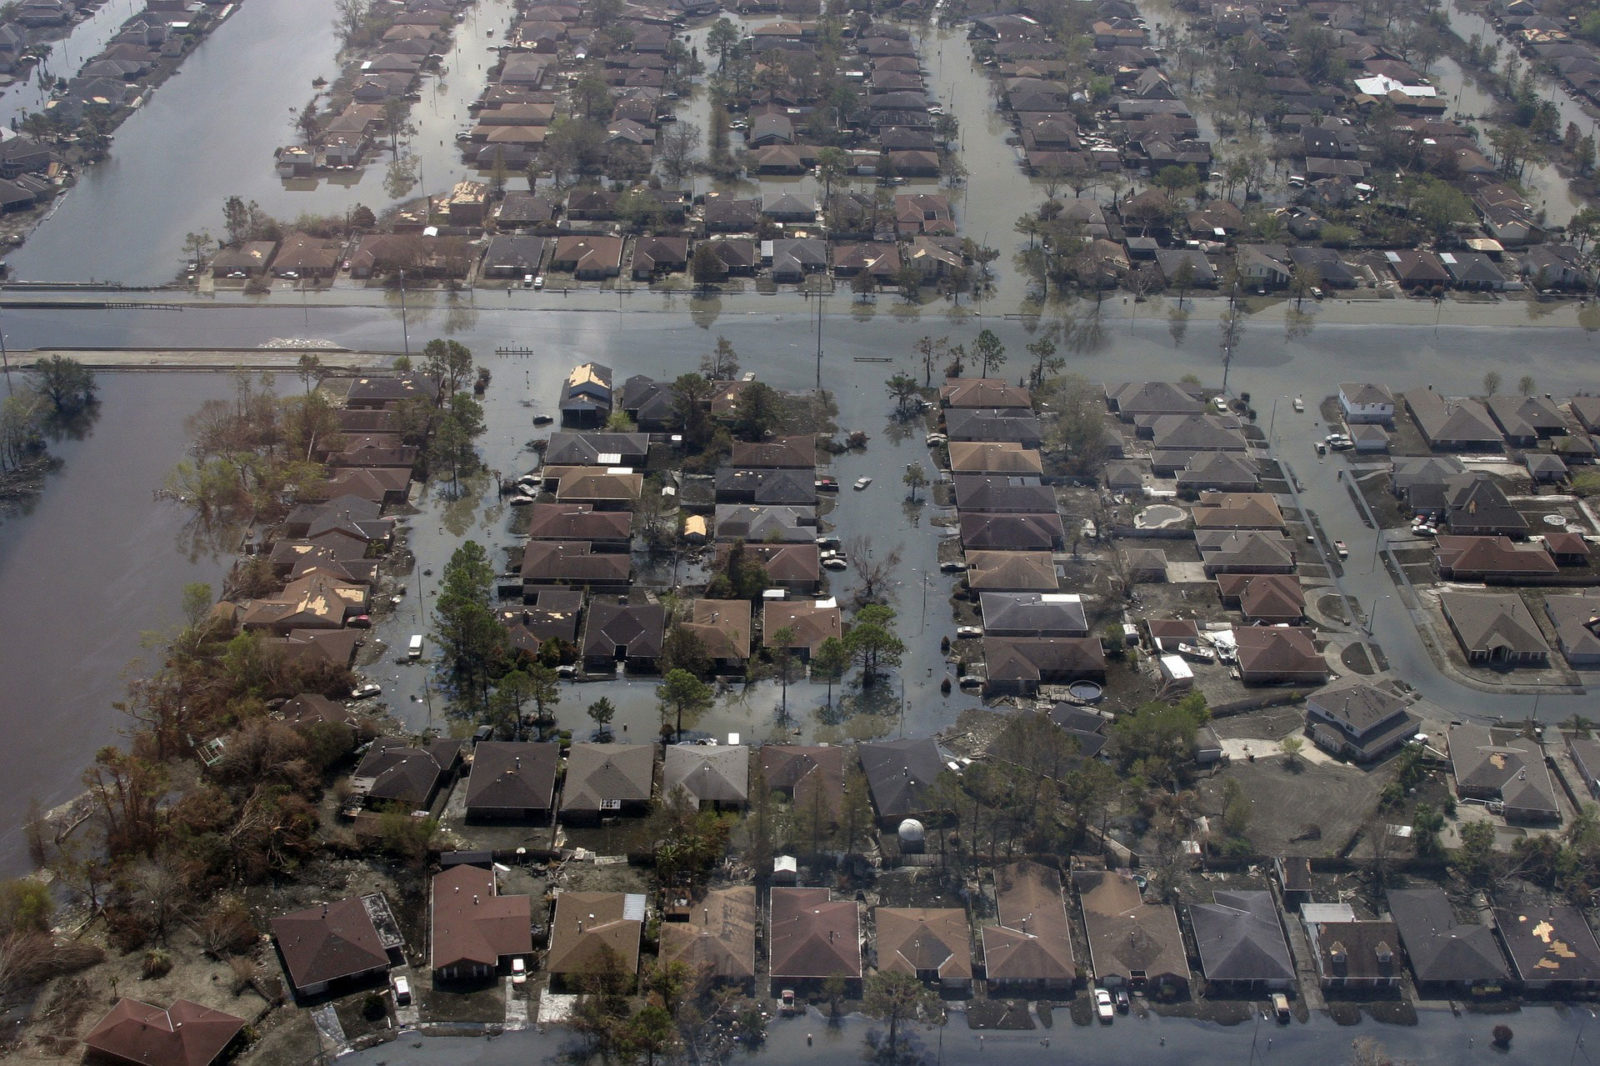 Hurricane floods in New Orleans